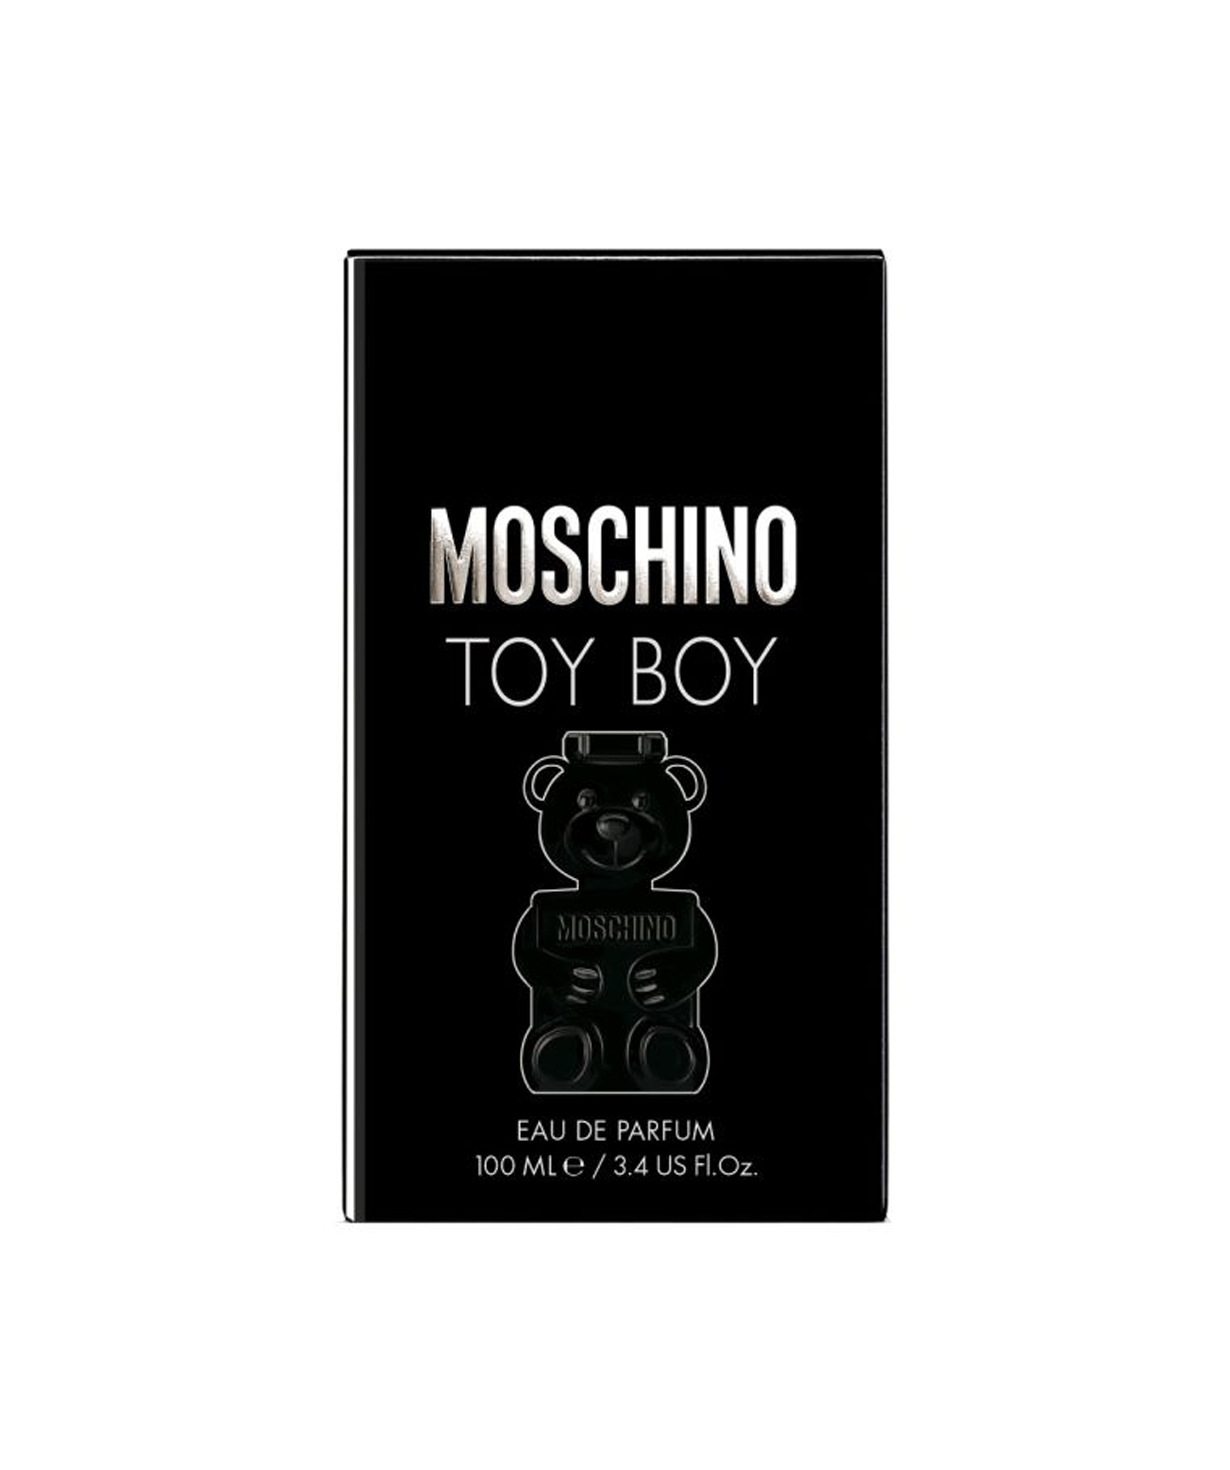 Perfume «Moschino» Toy Boy, for men, 100 ml